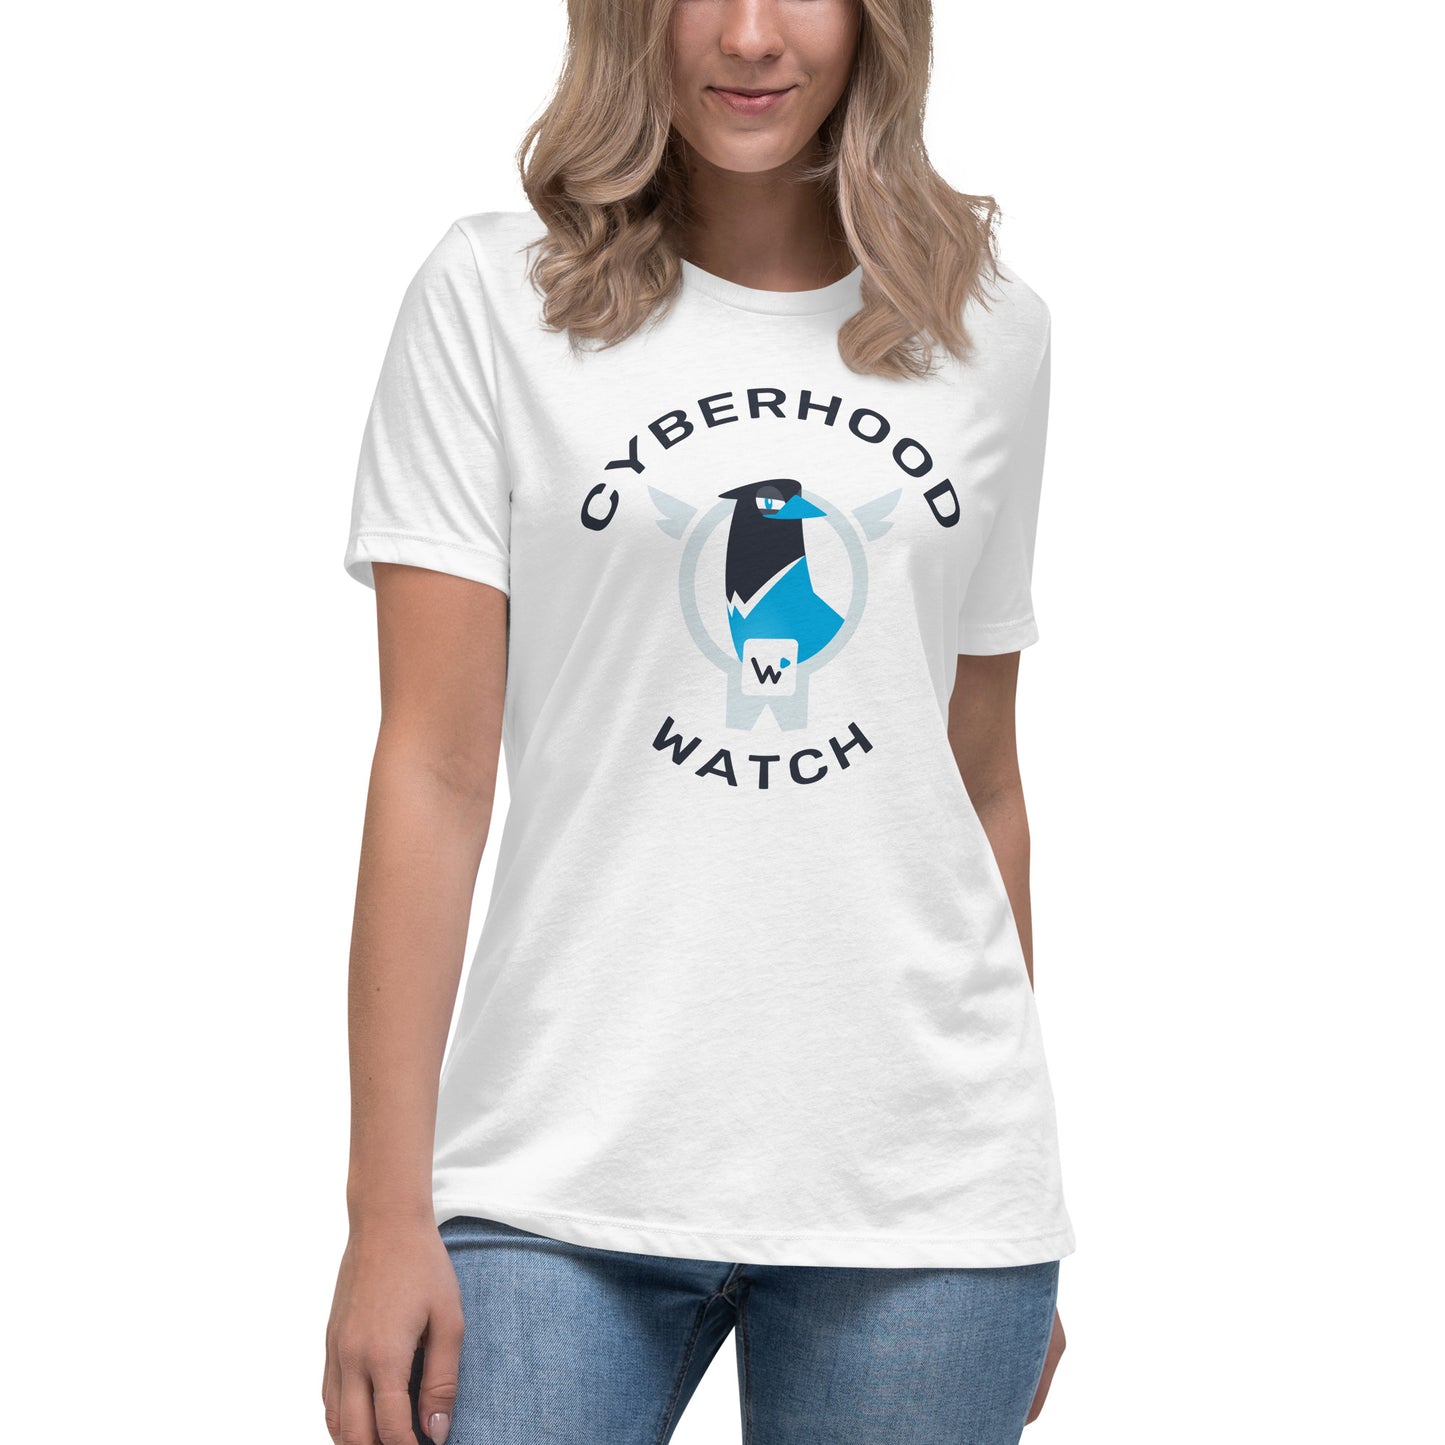 Women's Relaxed Cyberhood Watch T-Shirt